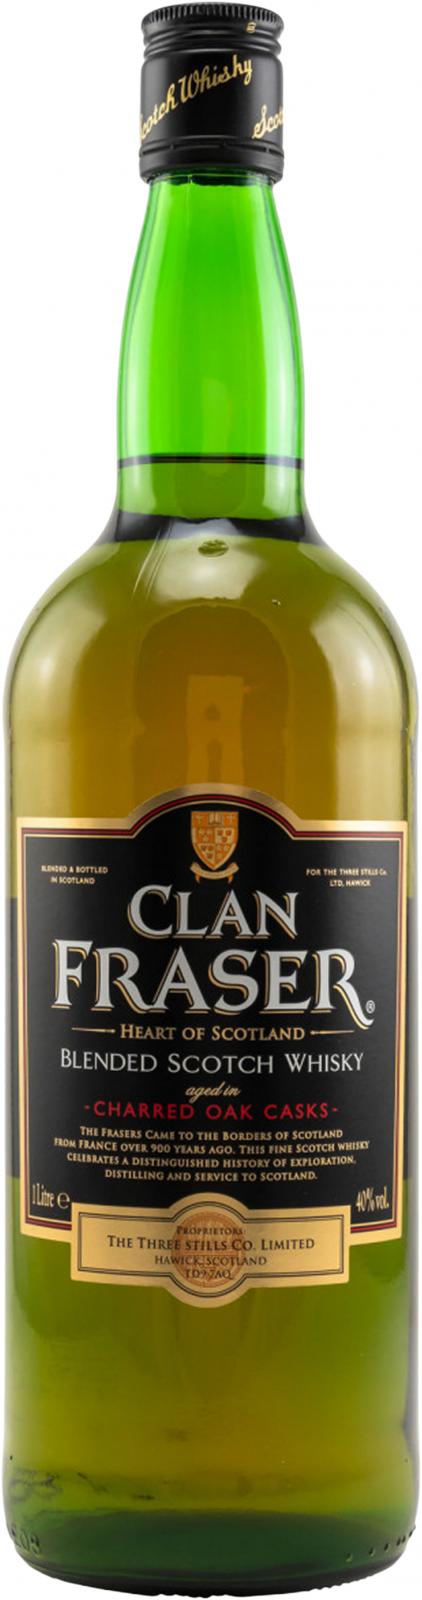 Clan Fraser Blended Scotch Whisky